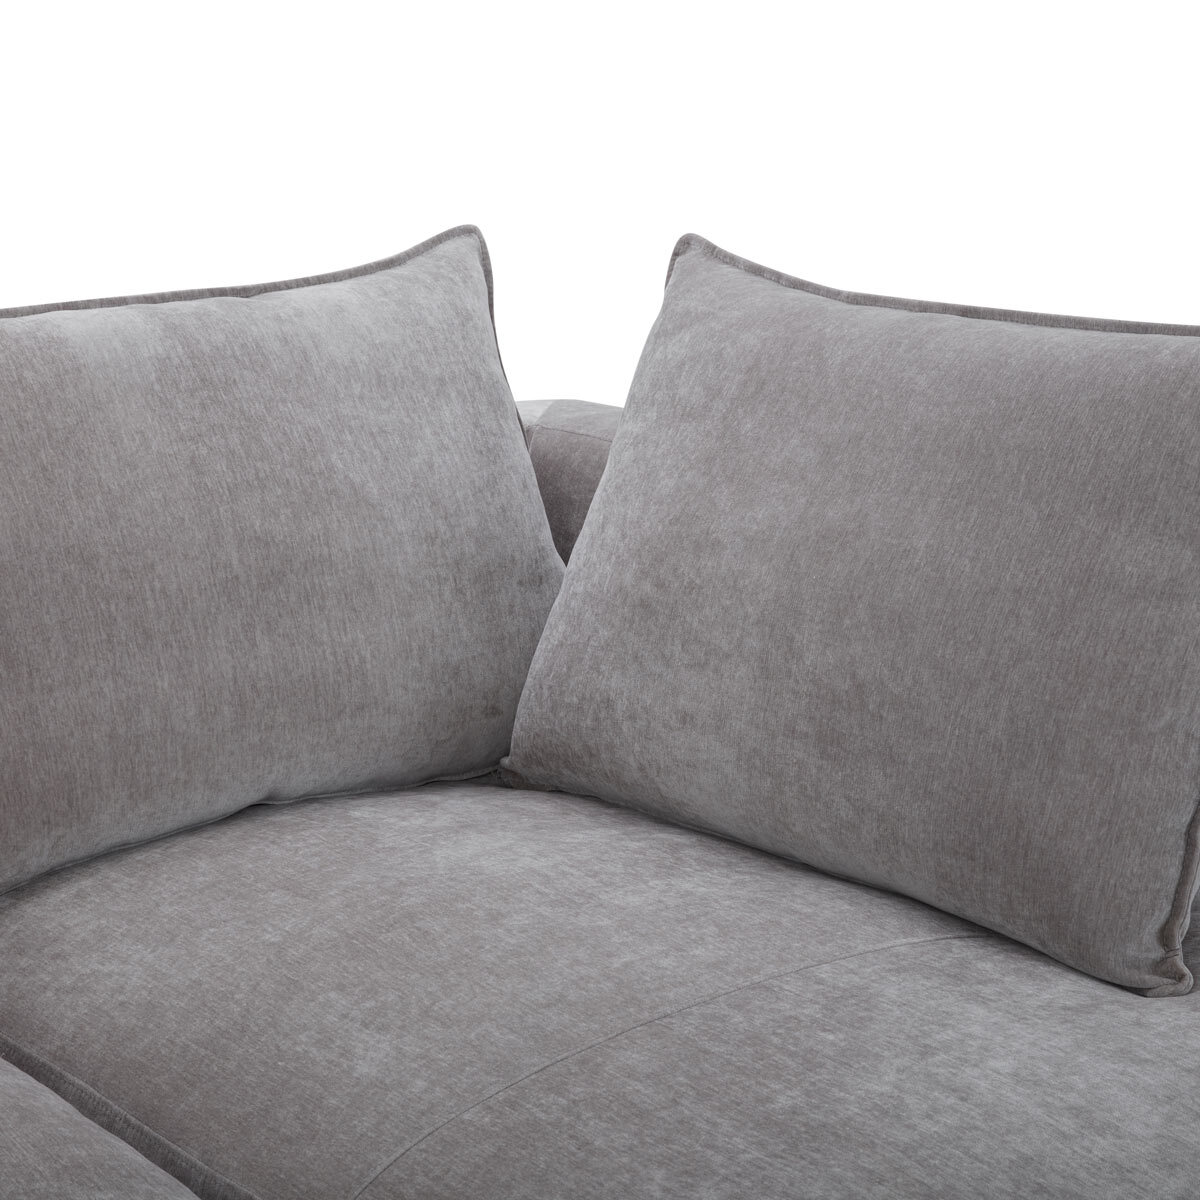 Gilman Creek Macon Grey  Fabric Sectional Sofa